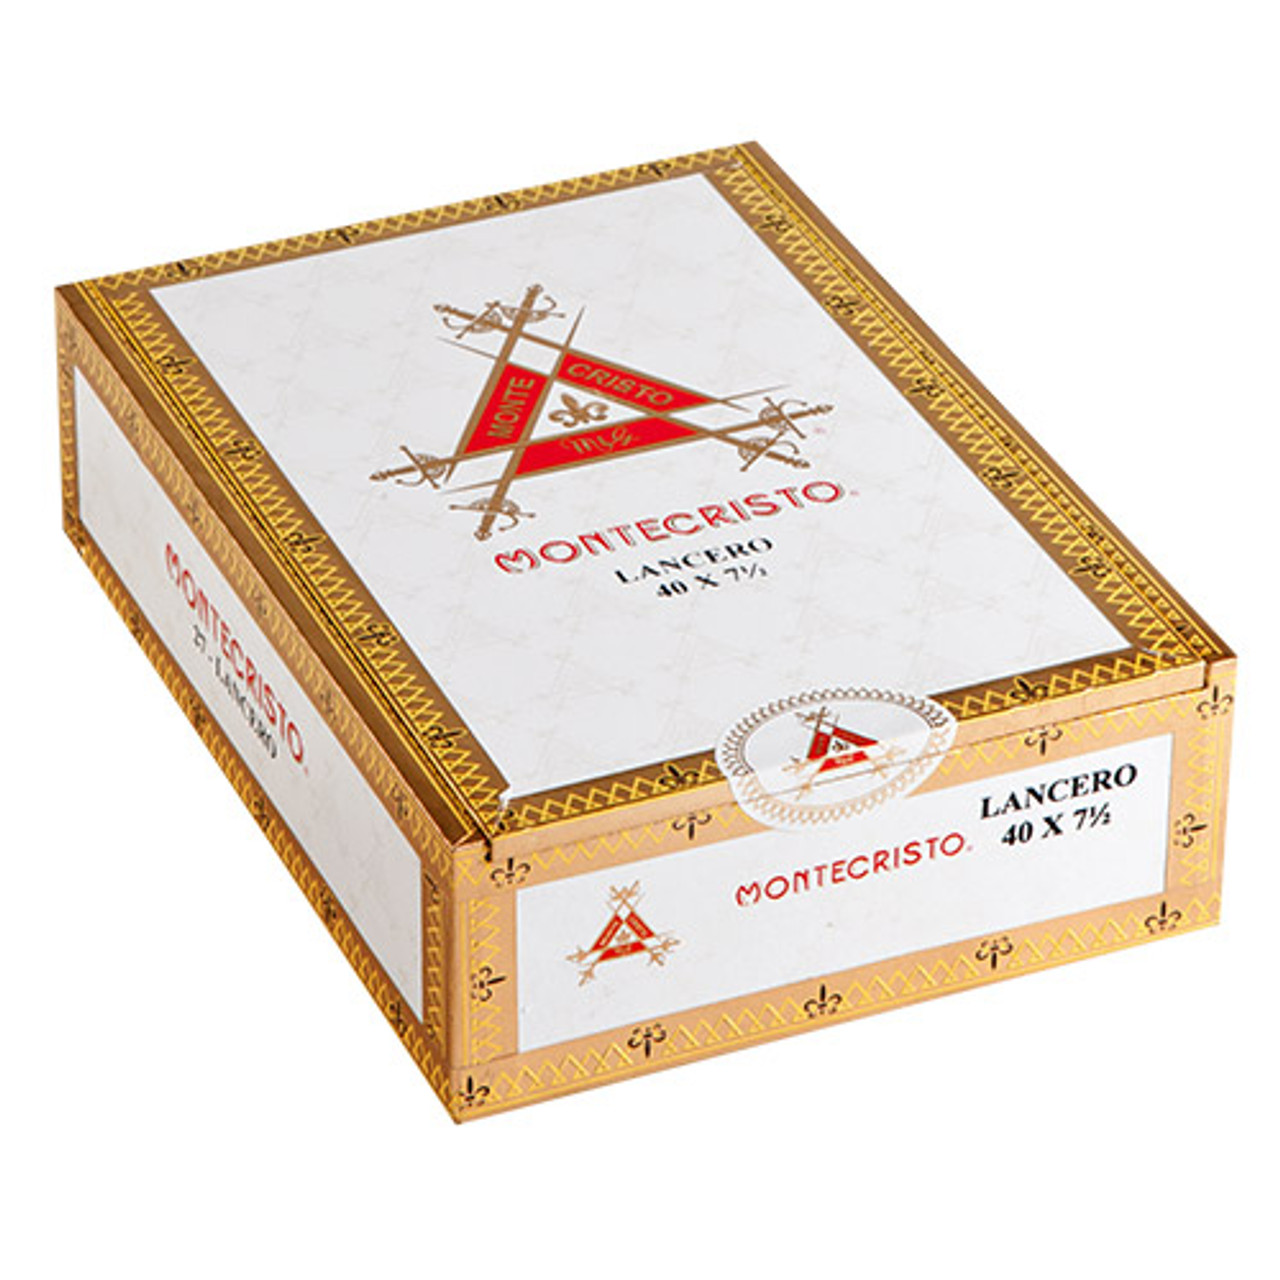 Montecristo White Robusto Grande Tube - 5 x 52 Cigars (Box of 15)